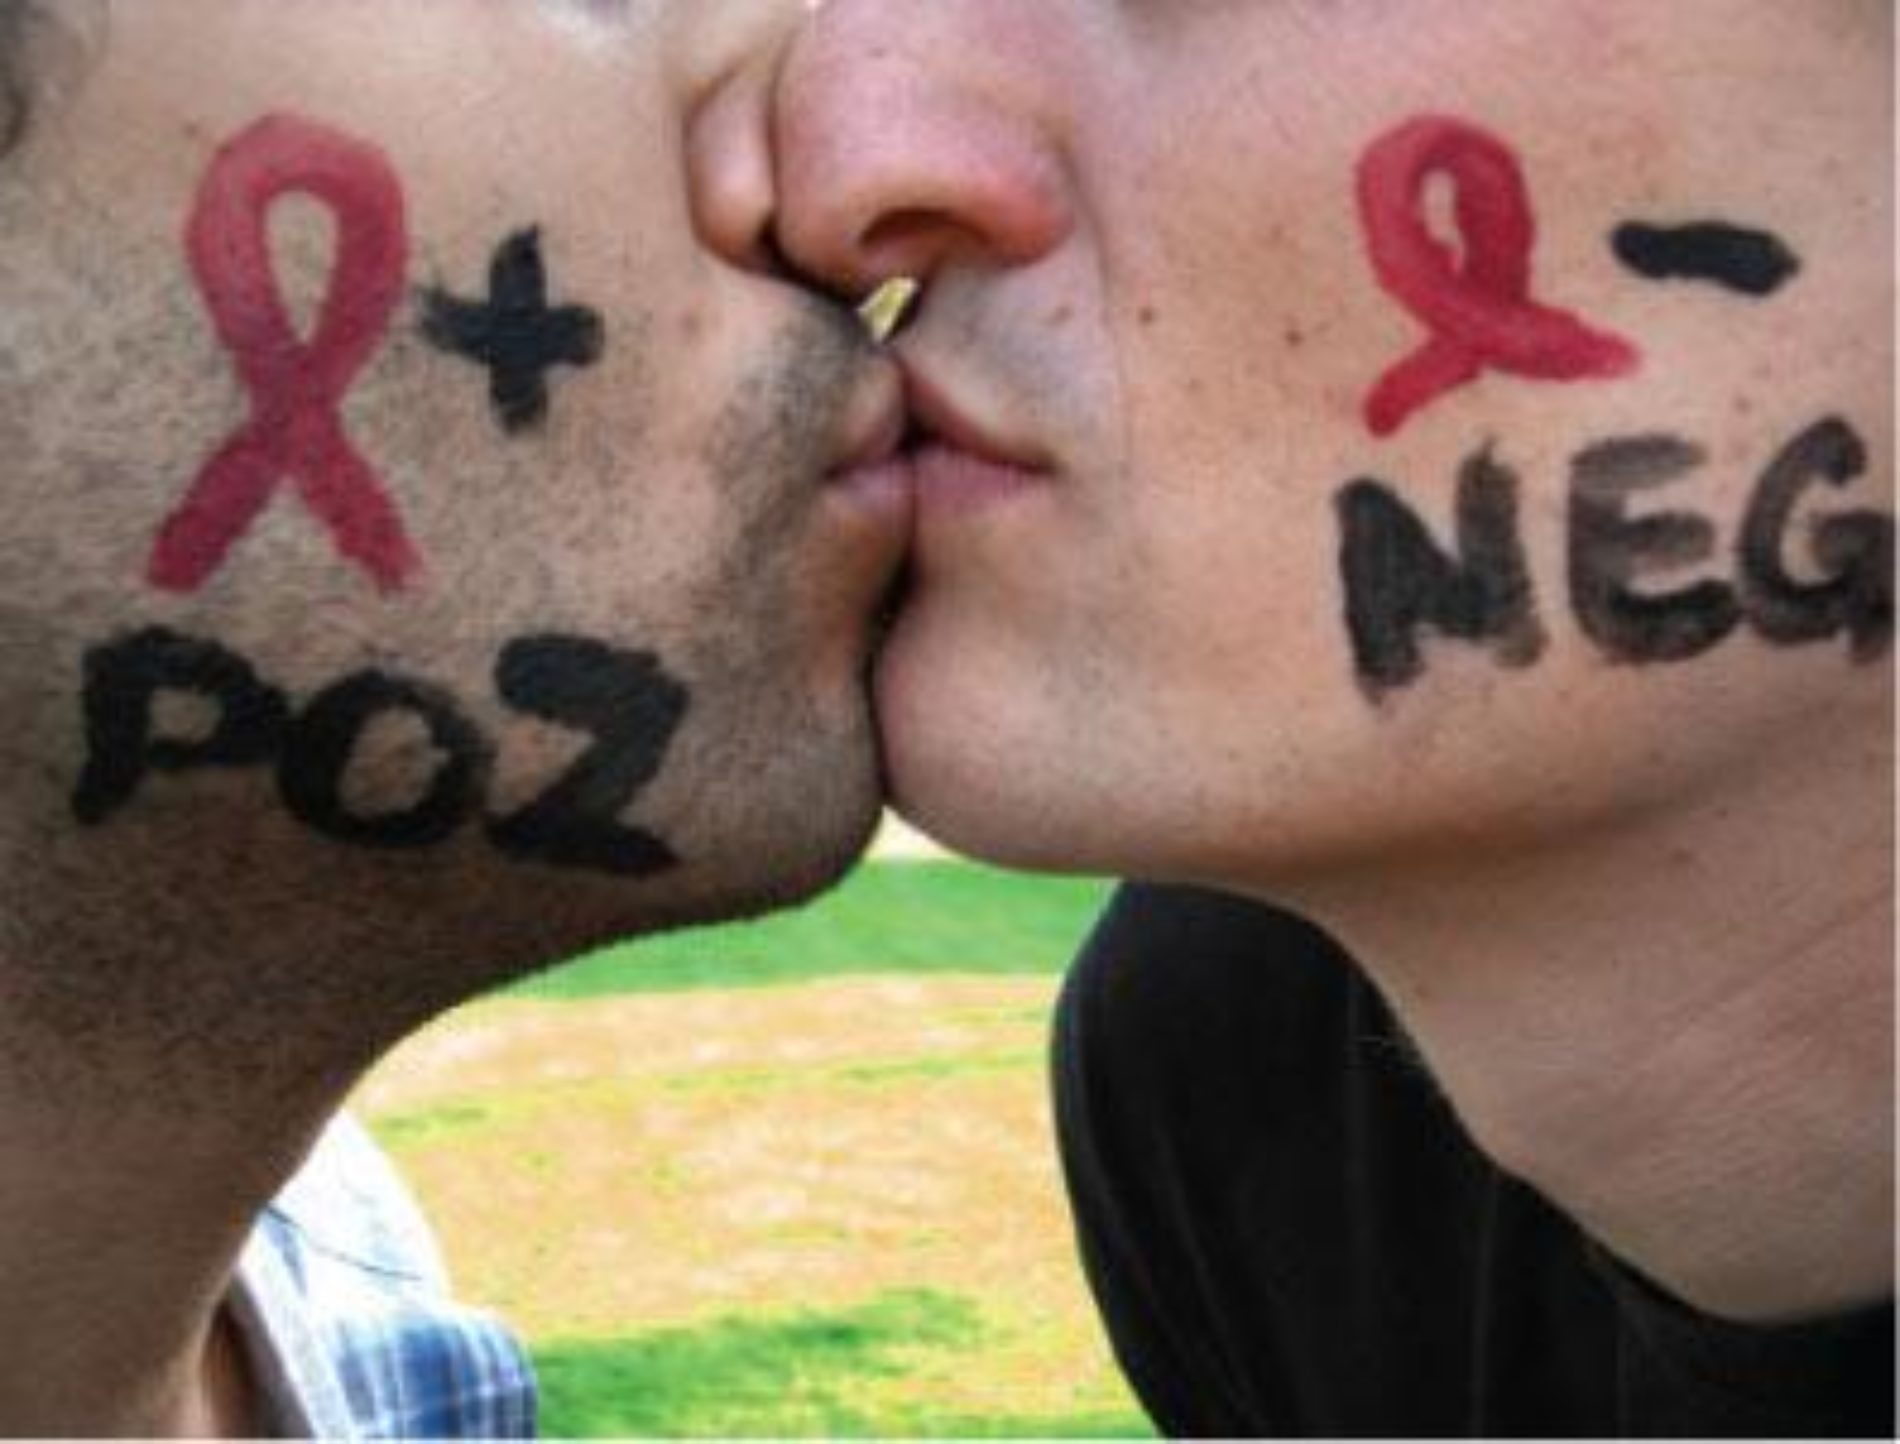 HIV, HOMOCOITUS AND THE NIGERIAN HOMOSEXUAL